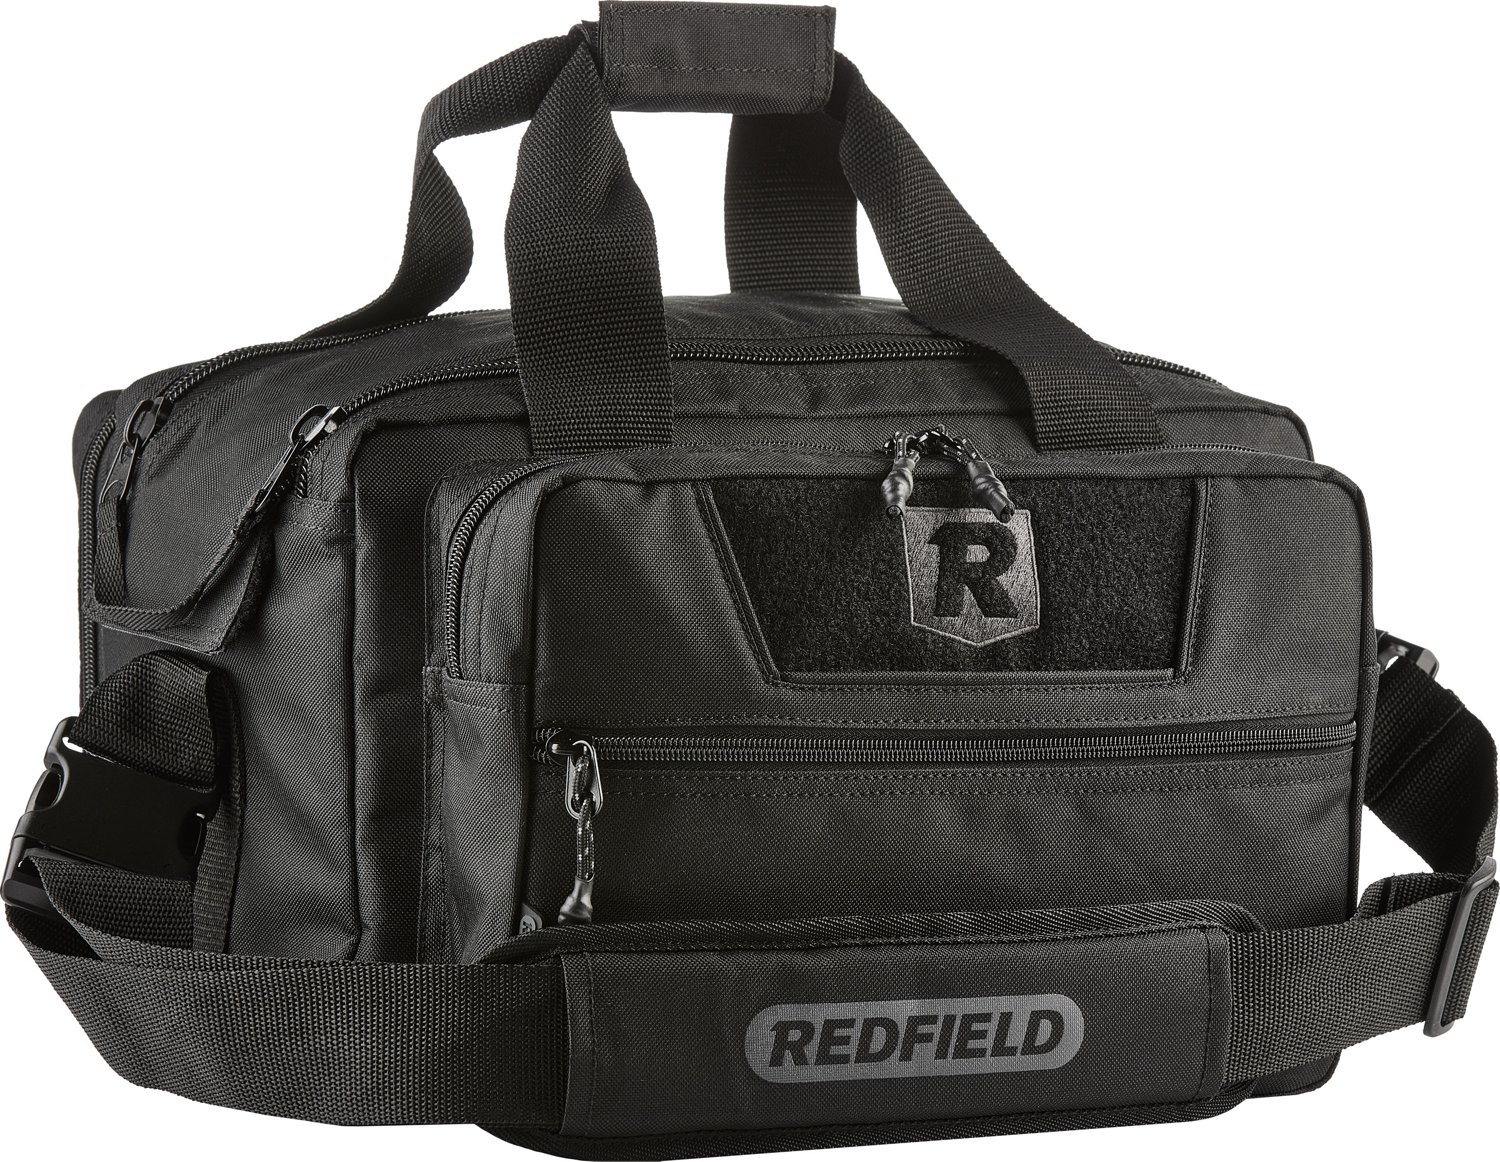 Redfield Gun Cases + Bags